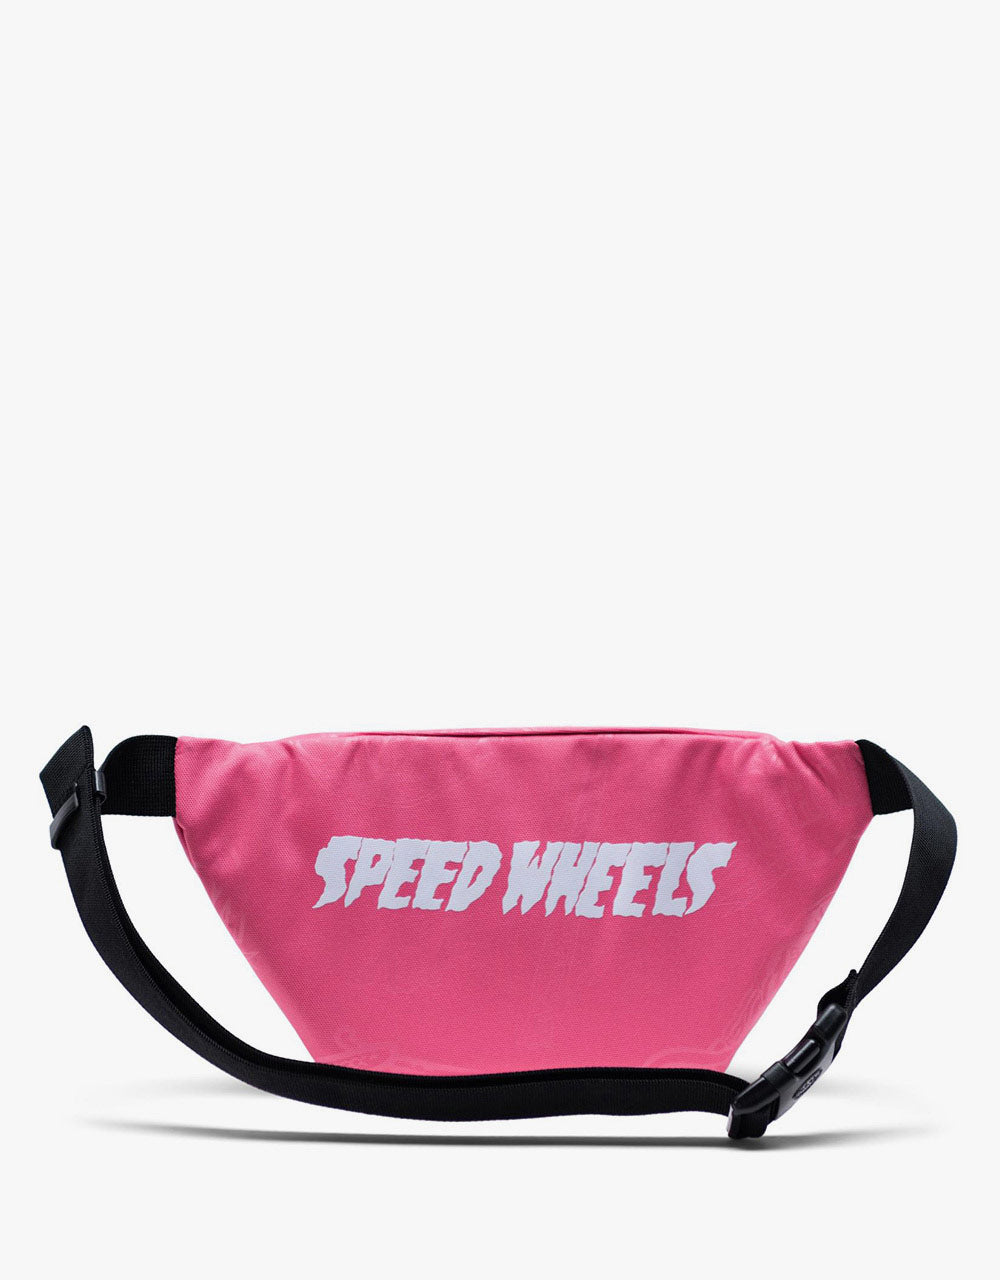 Herschel Supply Co. x Santa Cruz 17 Cross Body Bag - Hot Pink Speed